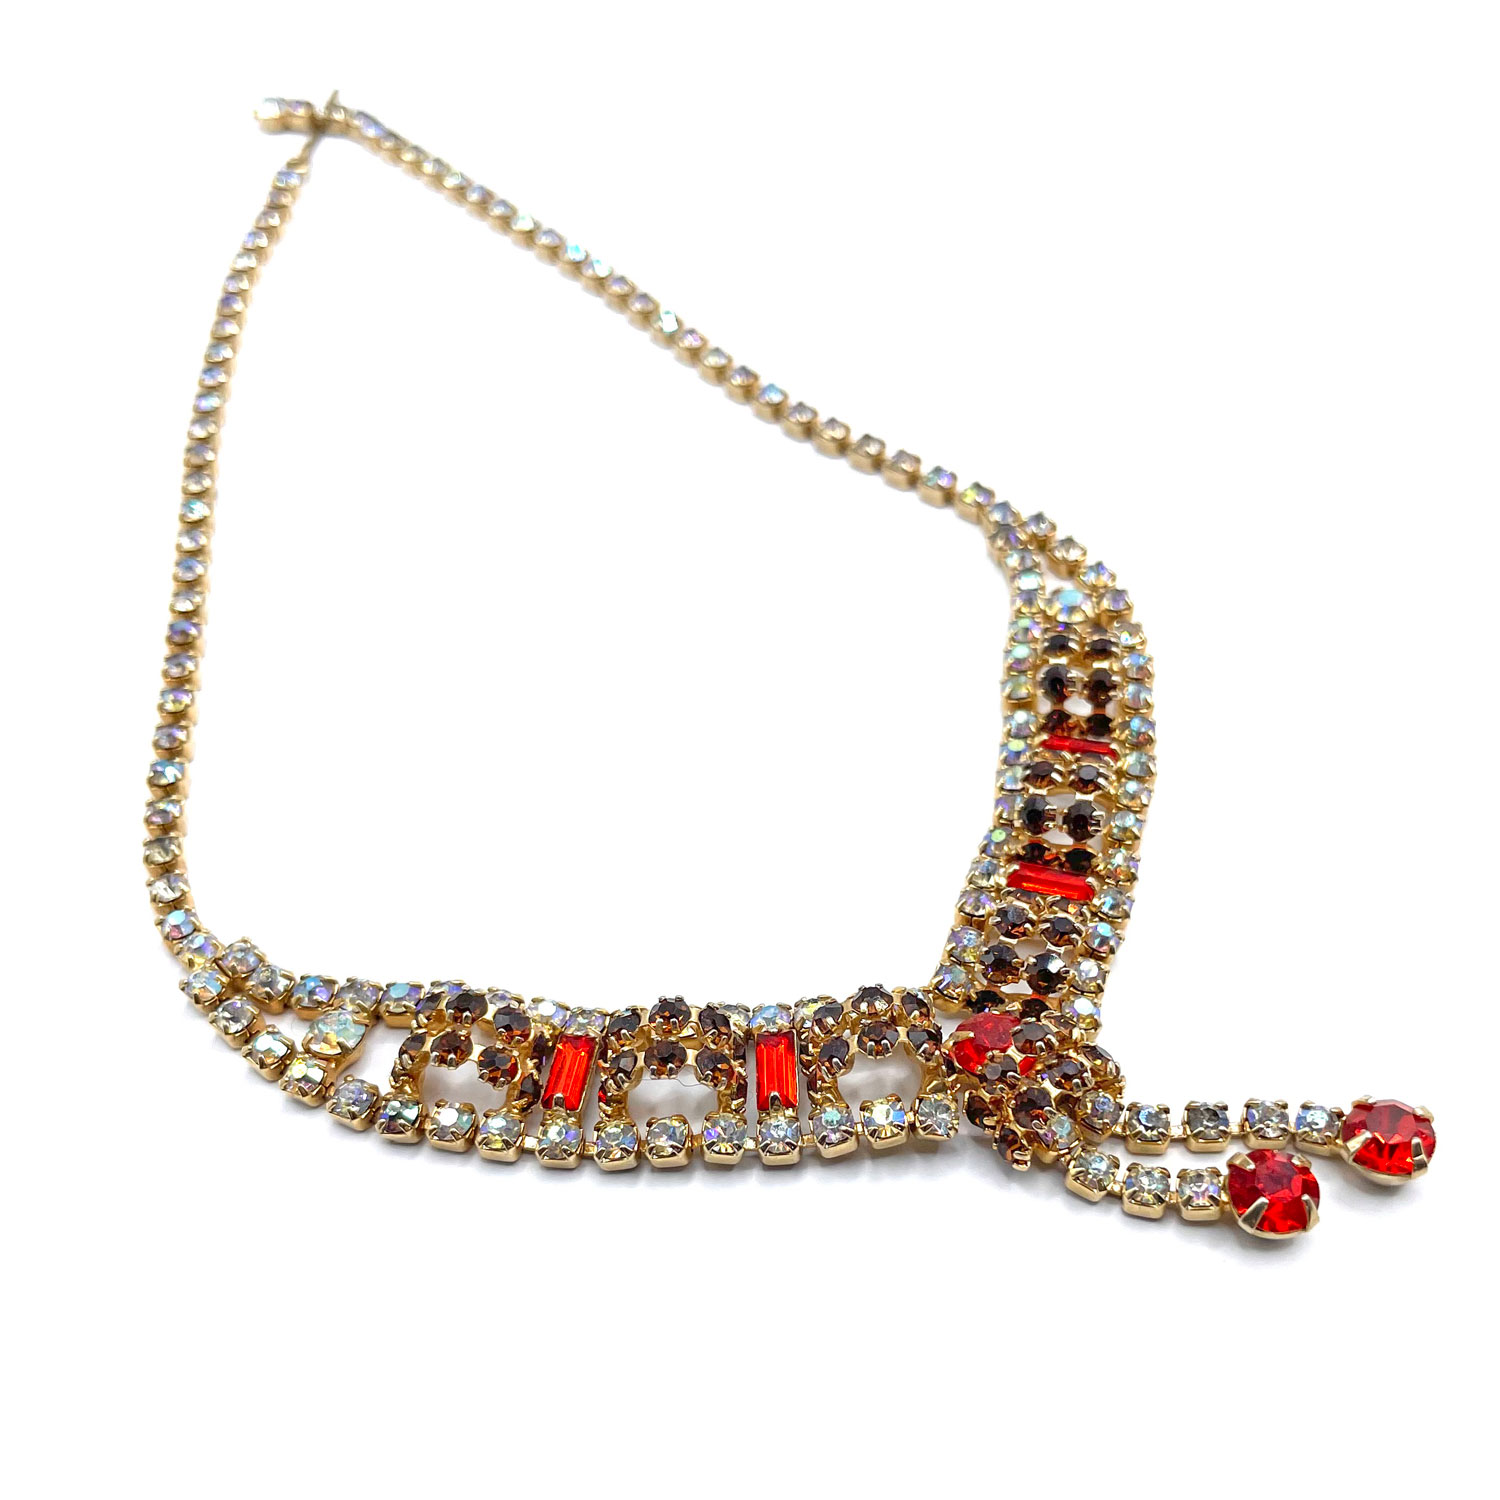 Rhinestone necklace and earring set